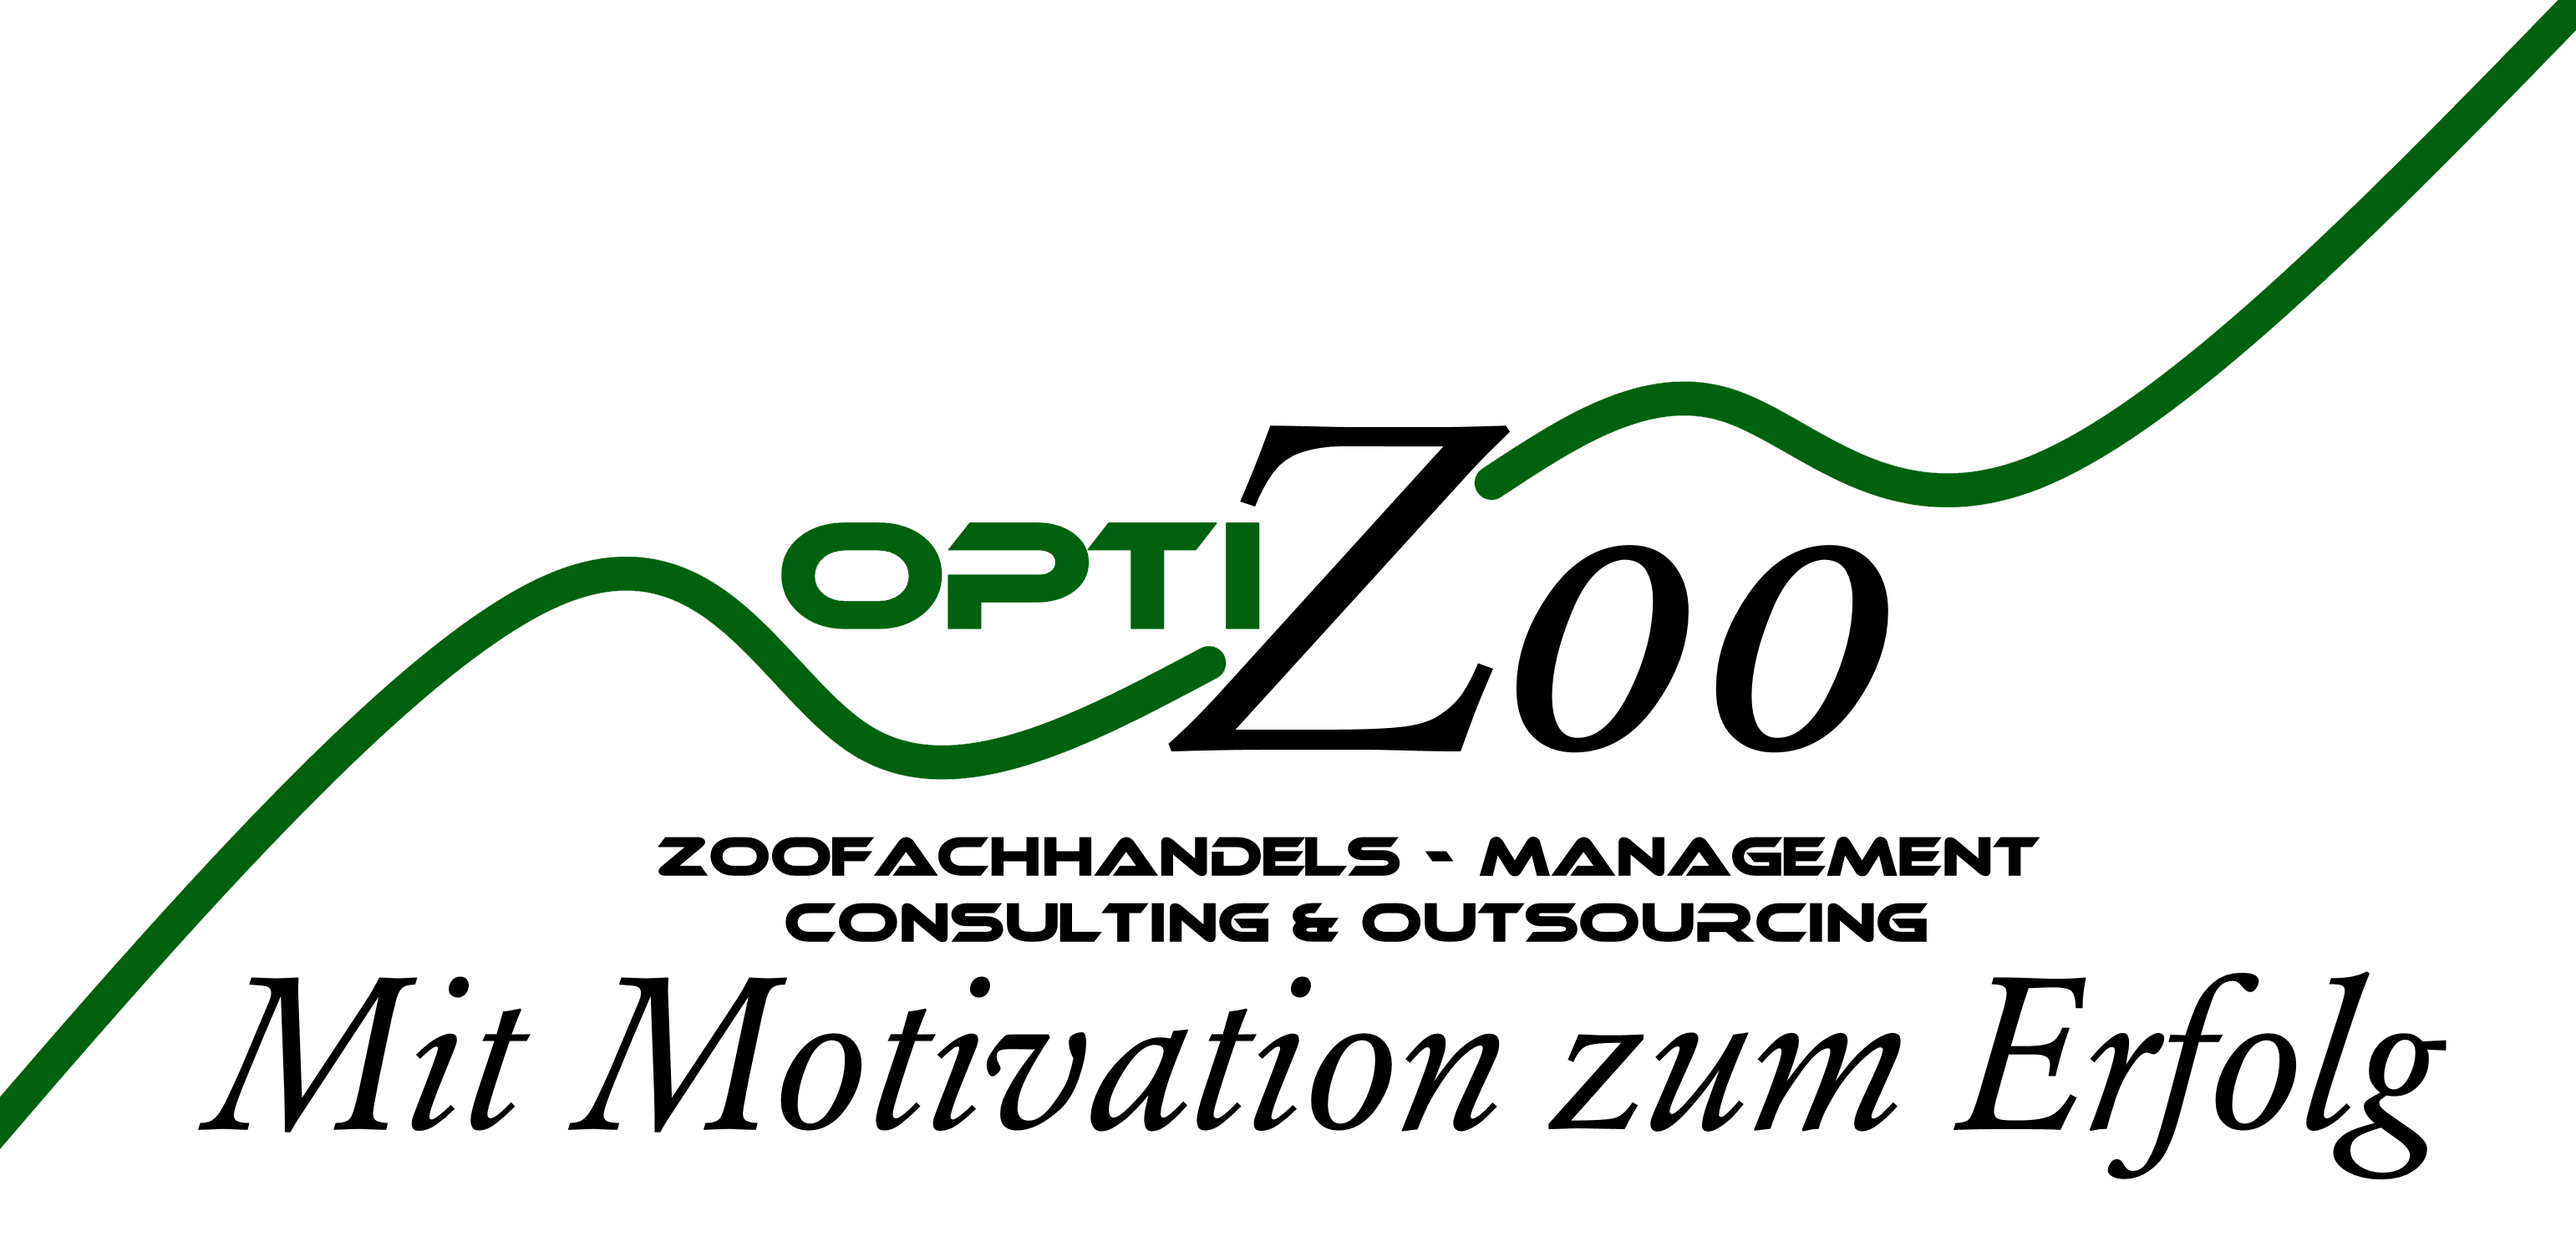 Zoofachmarkt Optimierung & Outsourcing